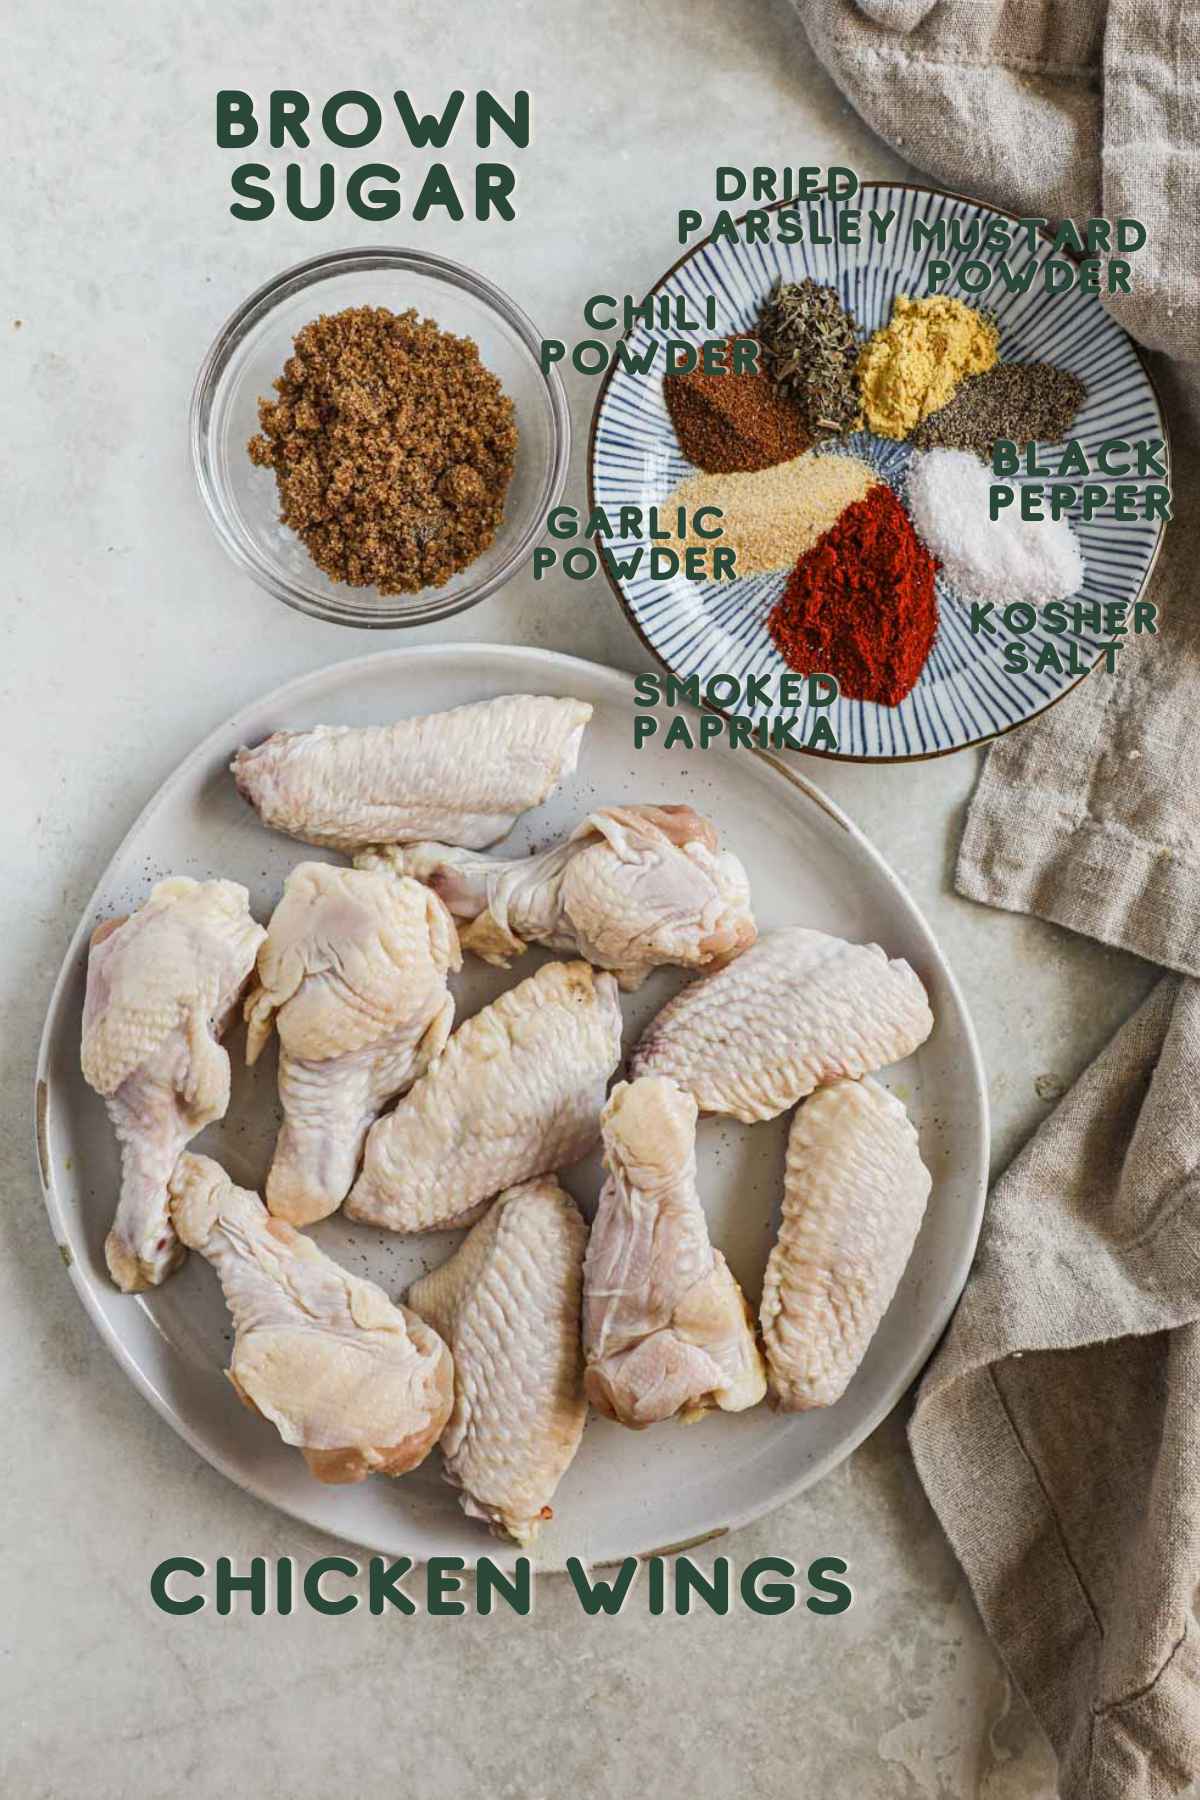 Ingredients to make baked dry rub chicken wings, chicken flats and drummettes, brown sugar, parsley, mustard powder, chili powder, garlic powder, smoked paprika, black pepper, kosher salt.